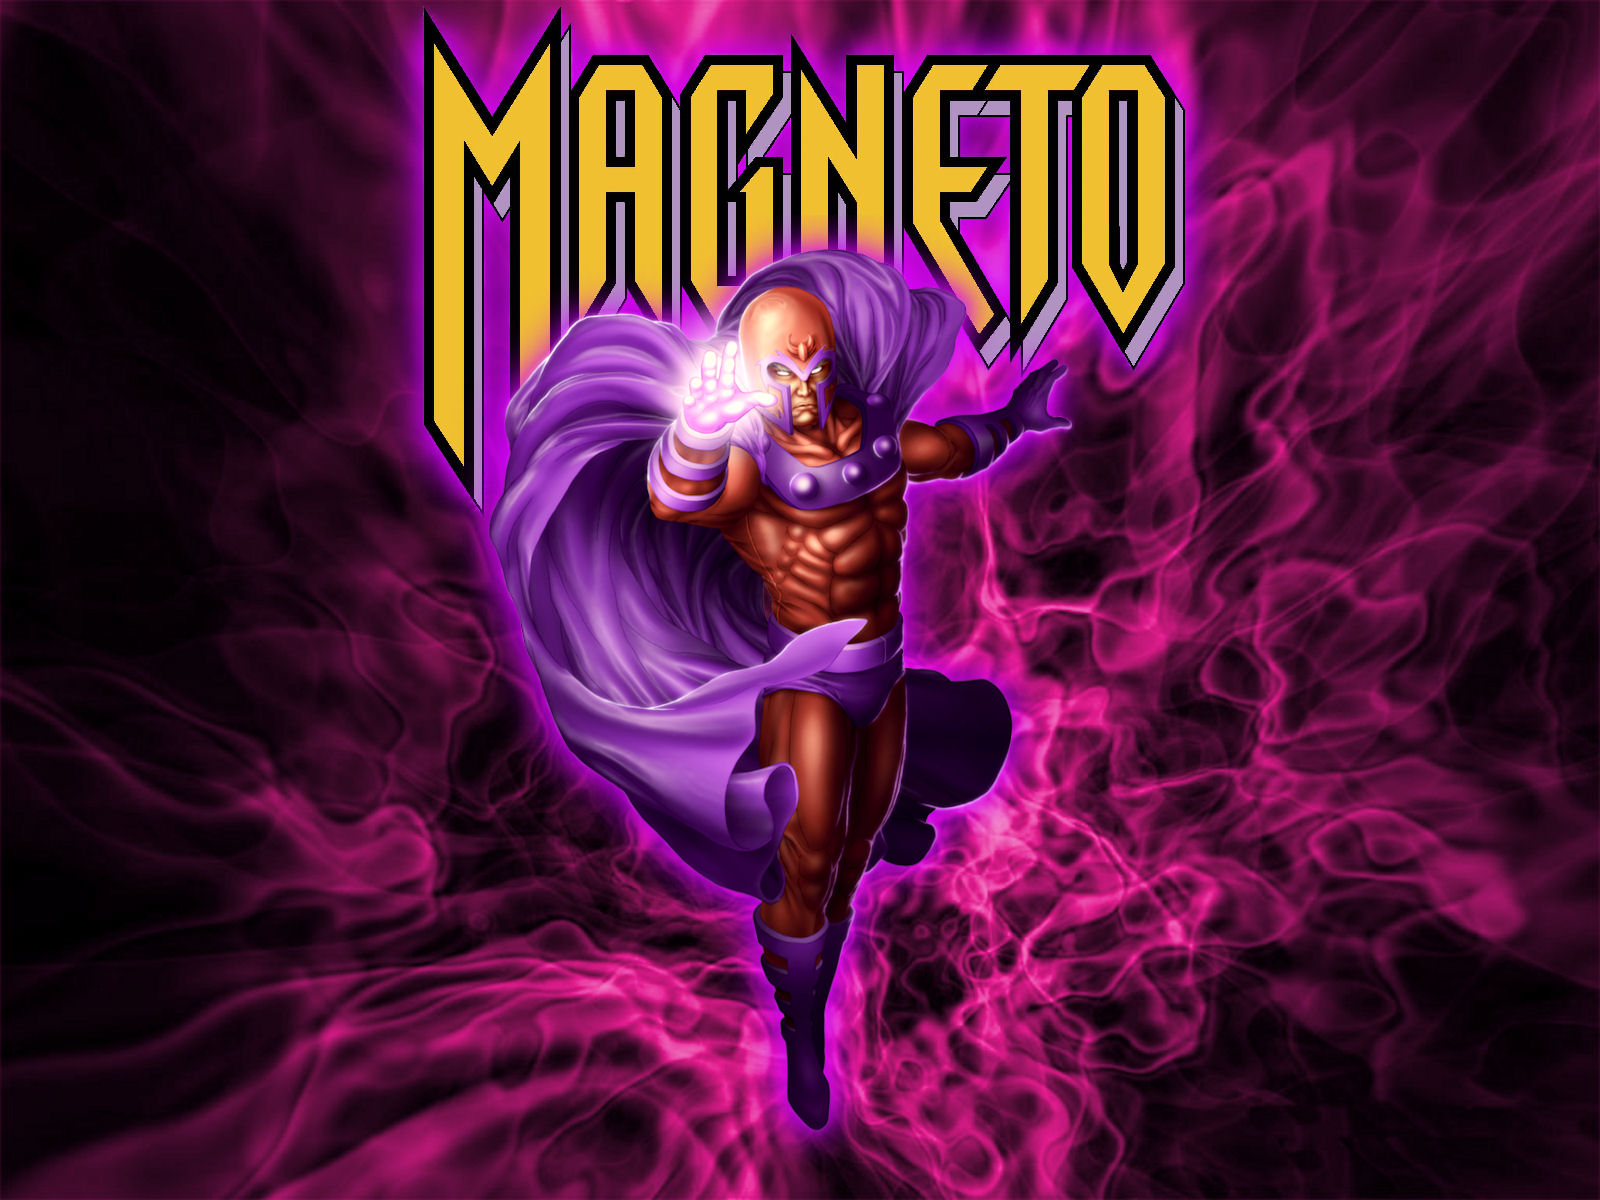 Magneto by Superman8193 on DeviantArt